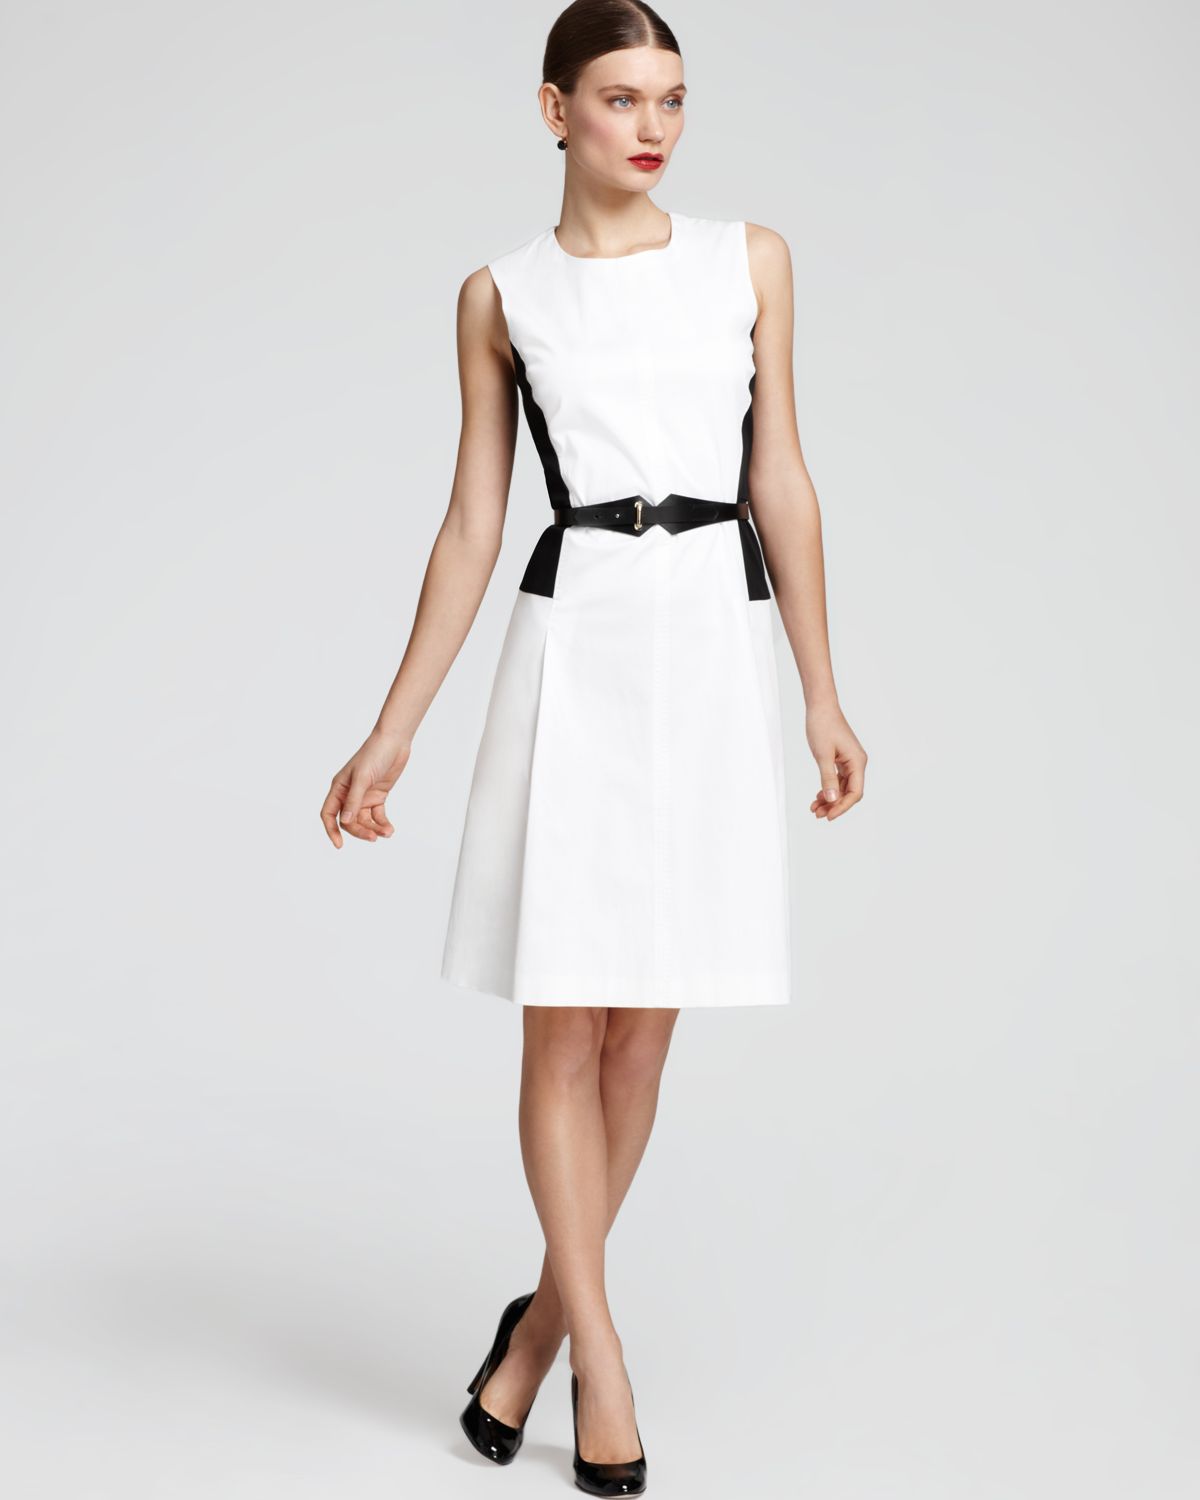 Max mara studio Eco Dress with Belt in White - Lyst